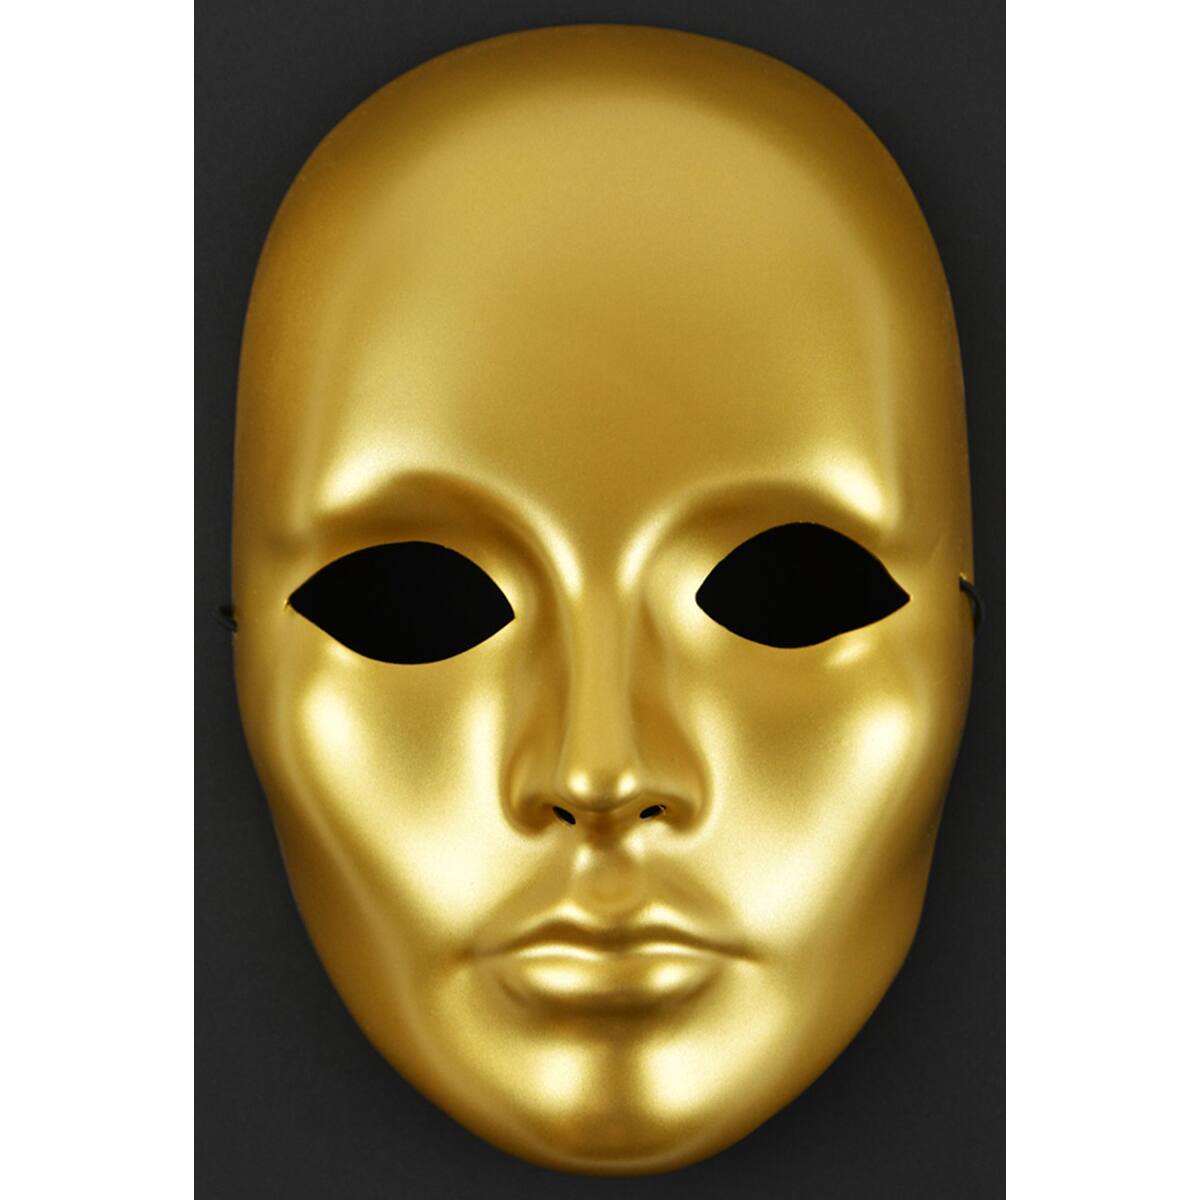 Mask-It Full Female Face Form 8.5 Gold